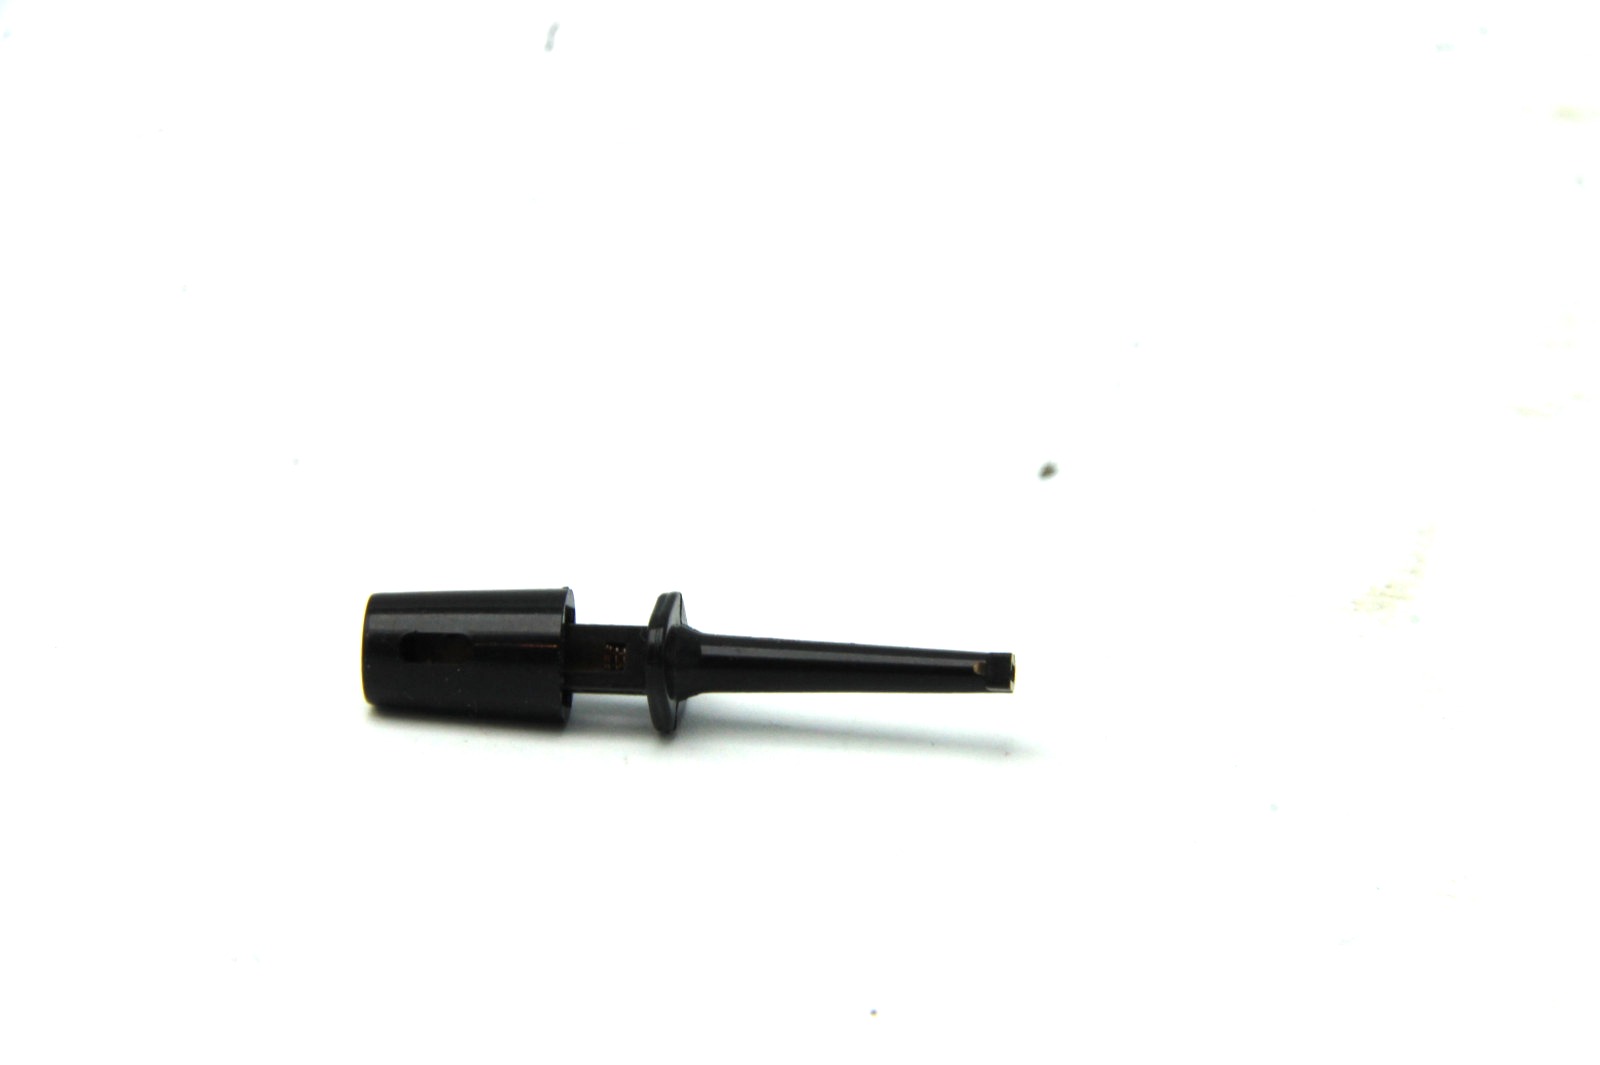 Klemm-Prüfspitze 40 mm schwarz mit Rückholfeder